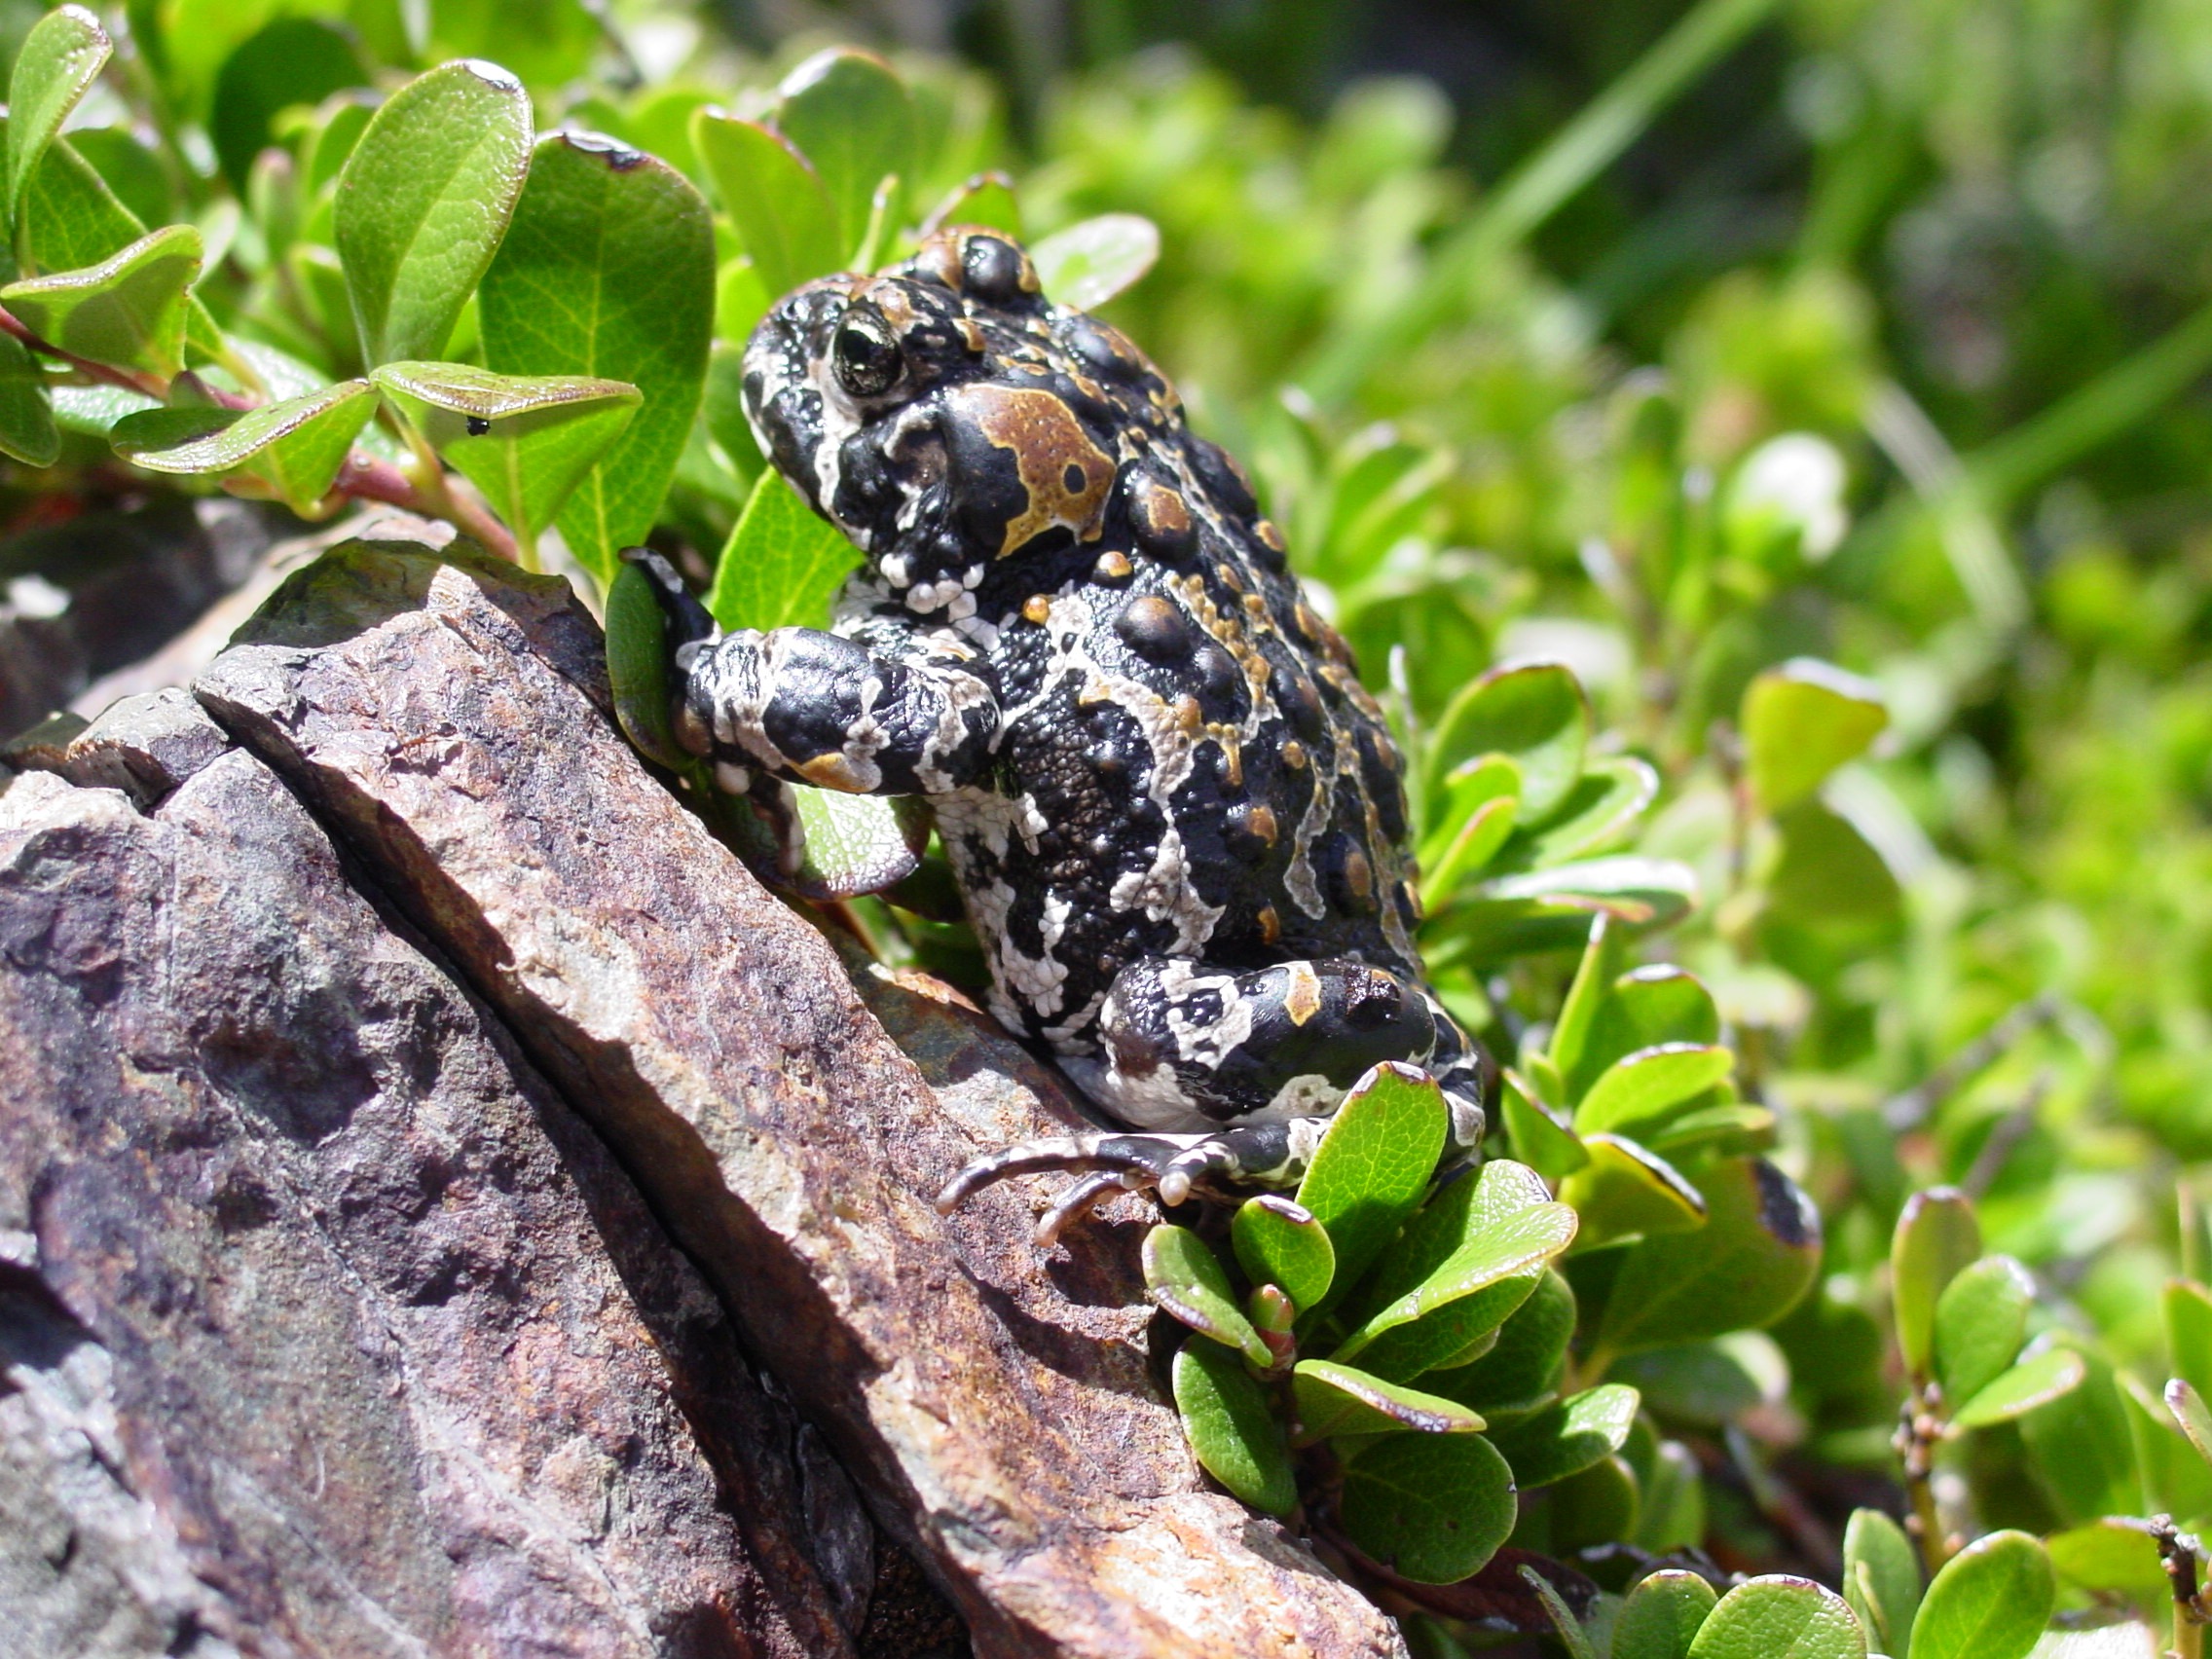 Adult female Yosemite toad in the High Sierra